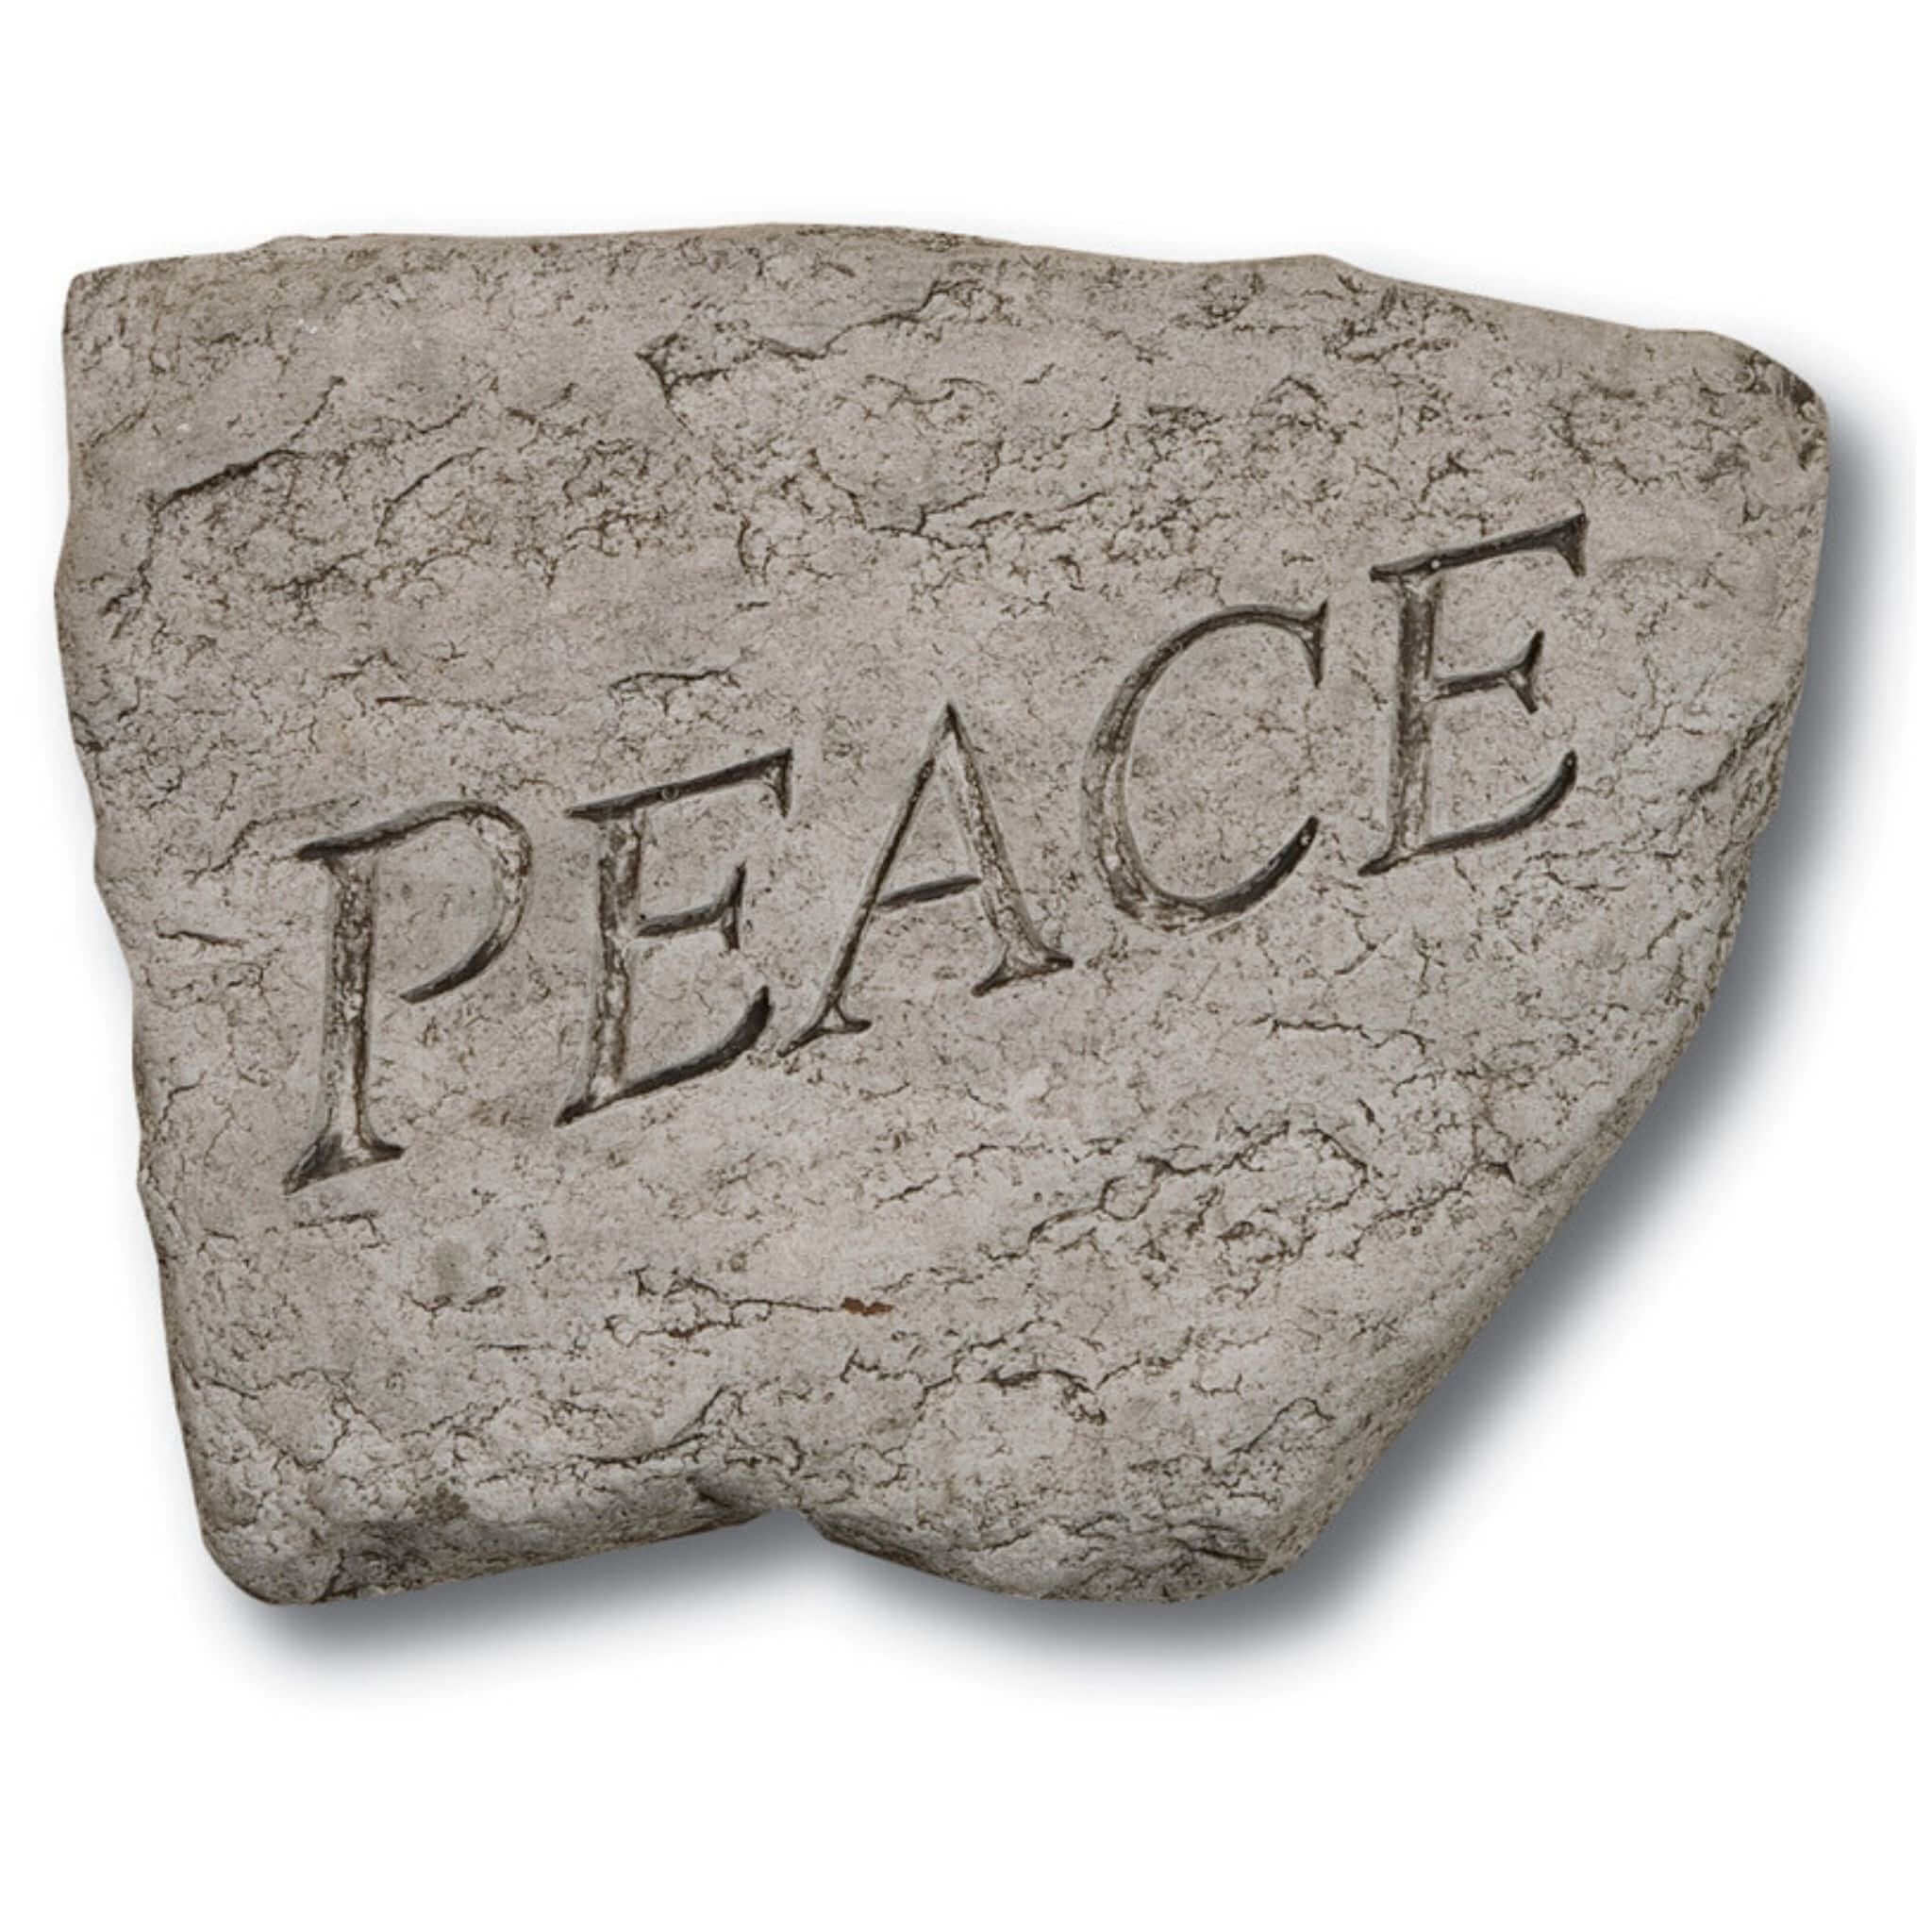 PEACE Concrete Garden Greeting Stone - Massarellis #1935